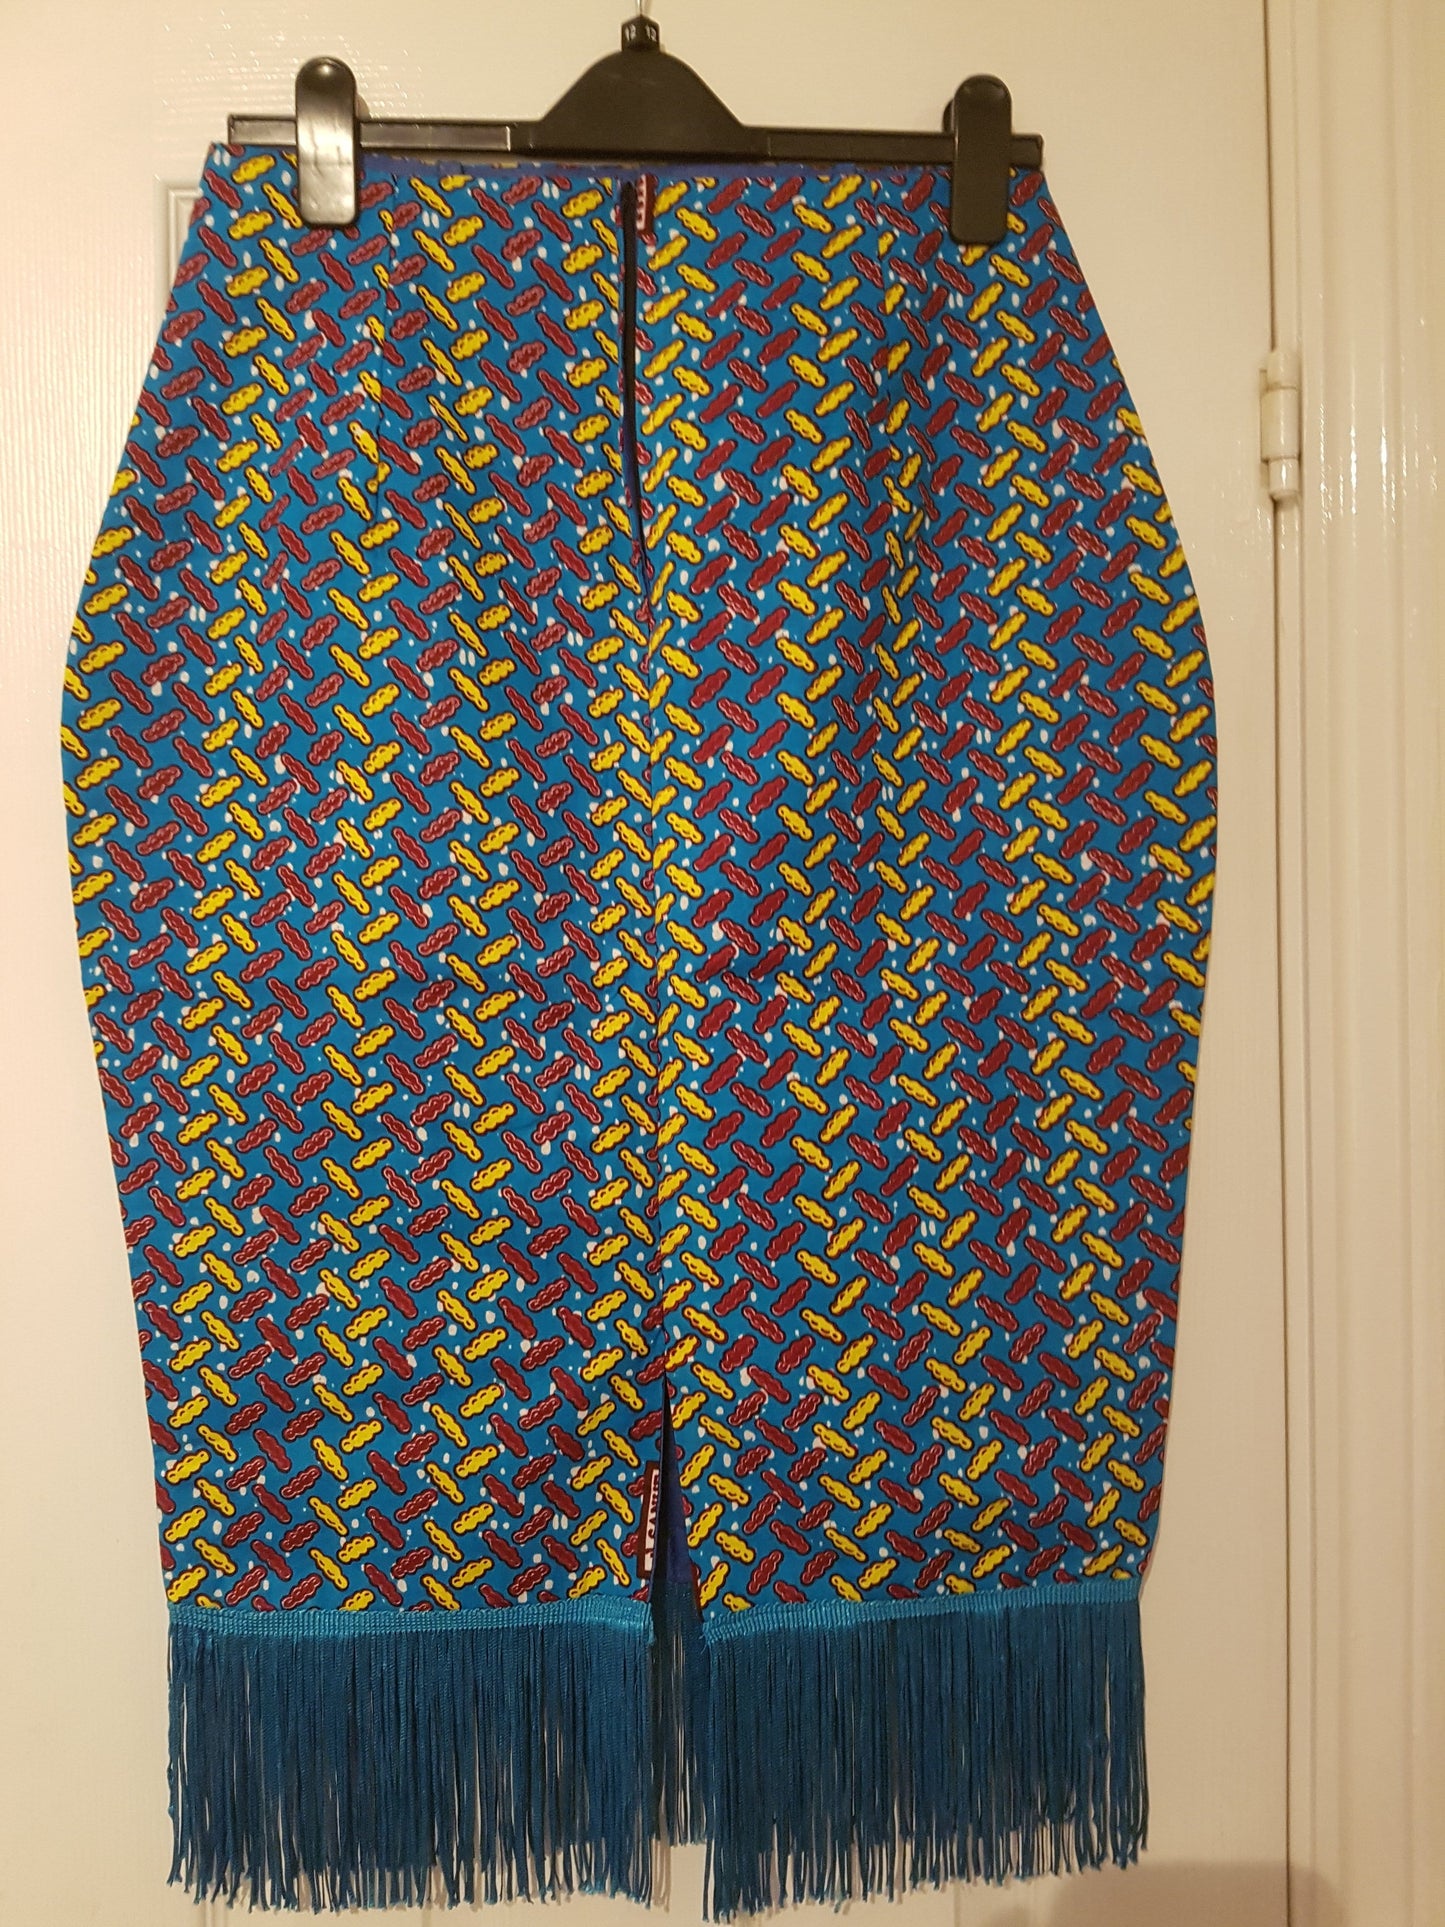 Ankara Pencil Skirt with Blue Trim